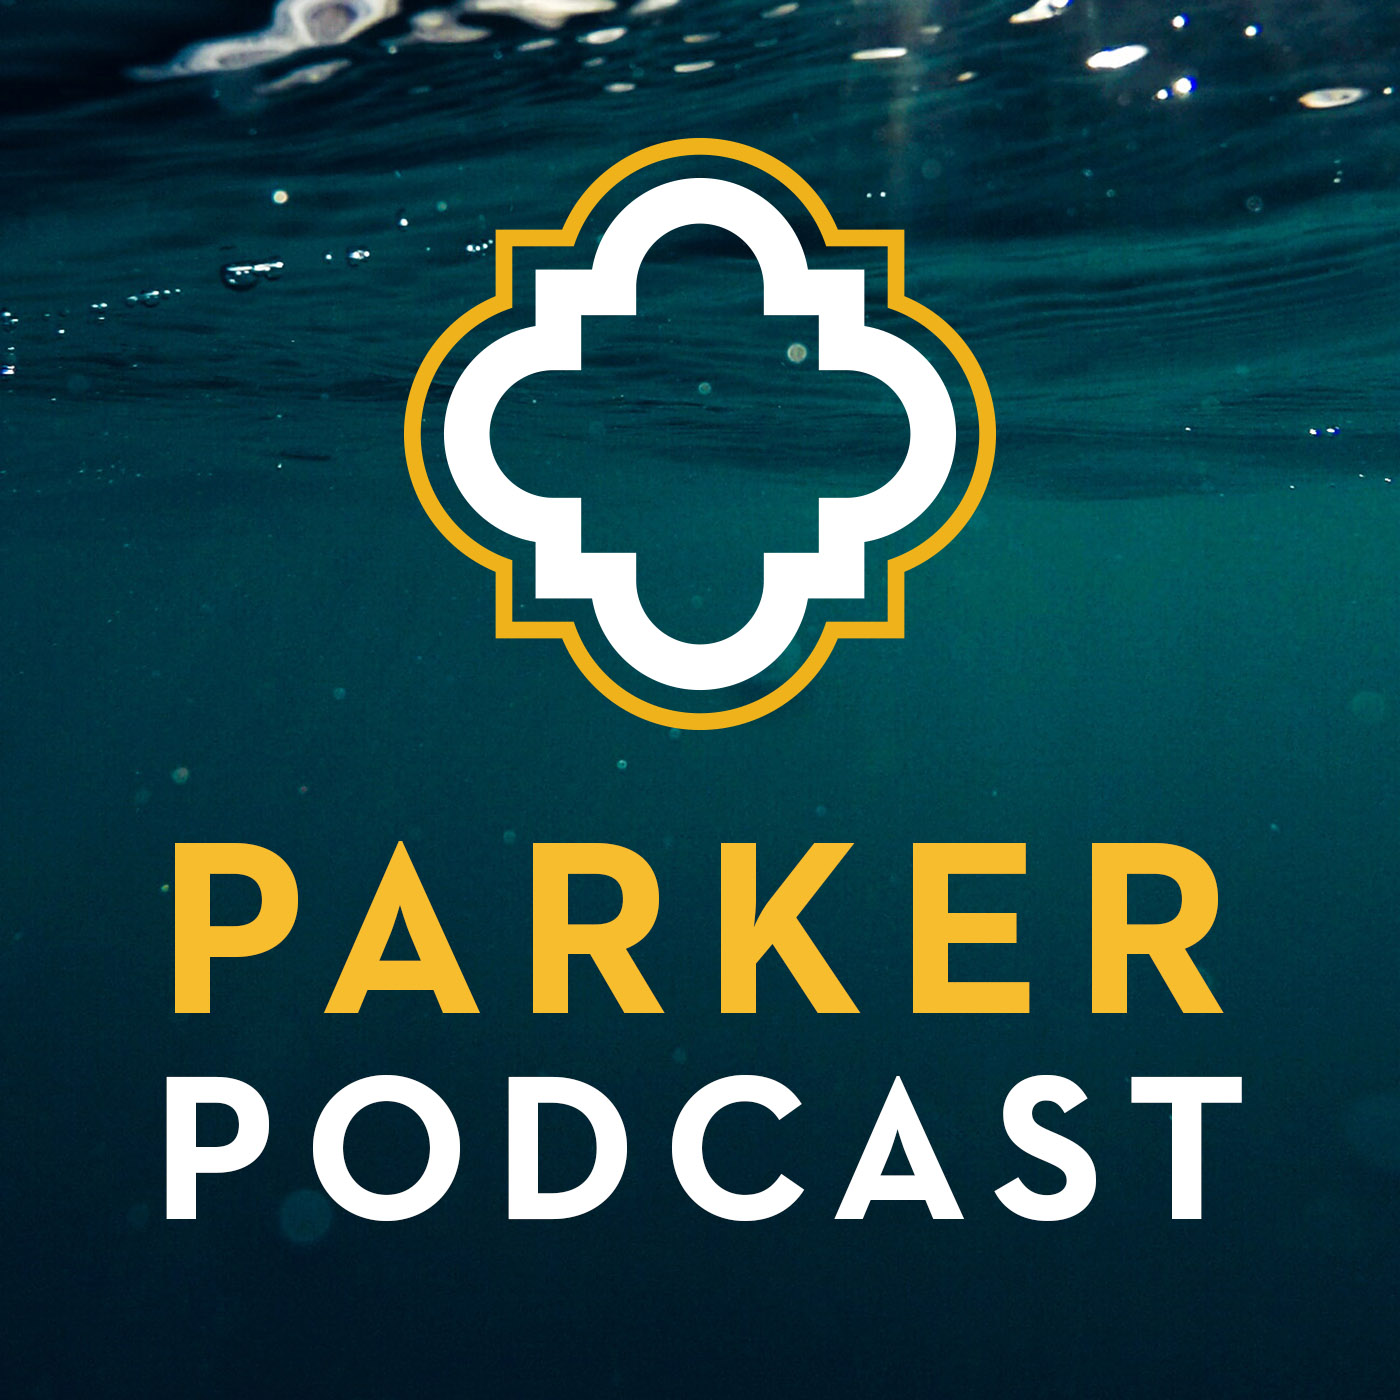 Parker Podcast